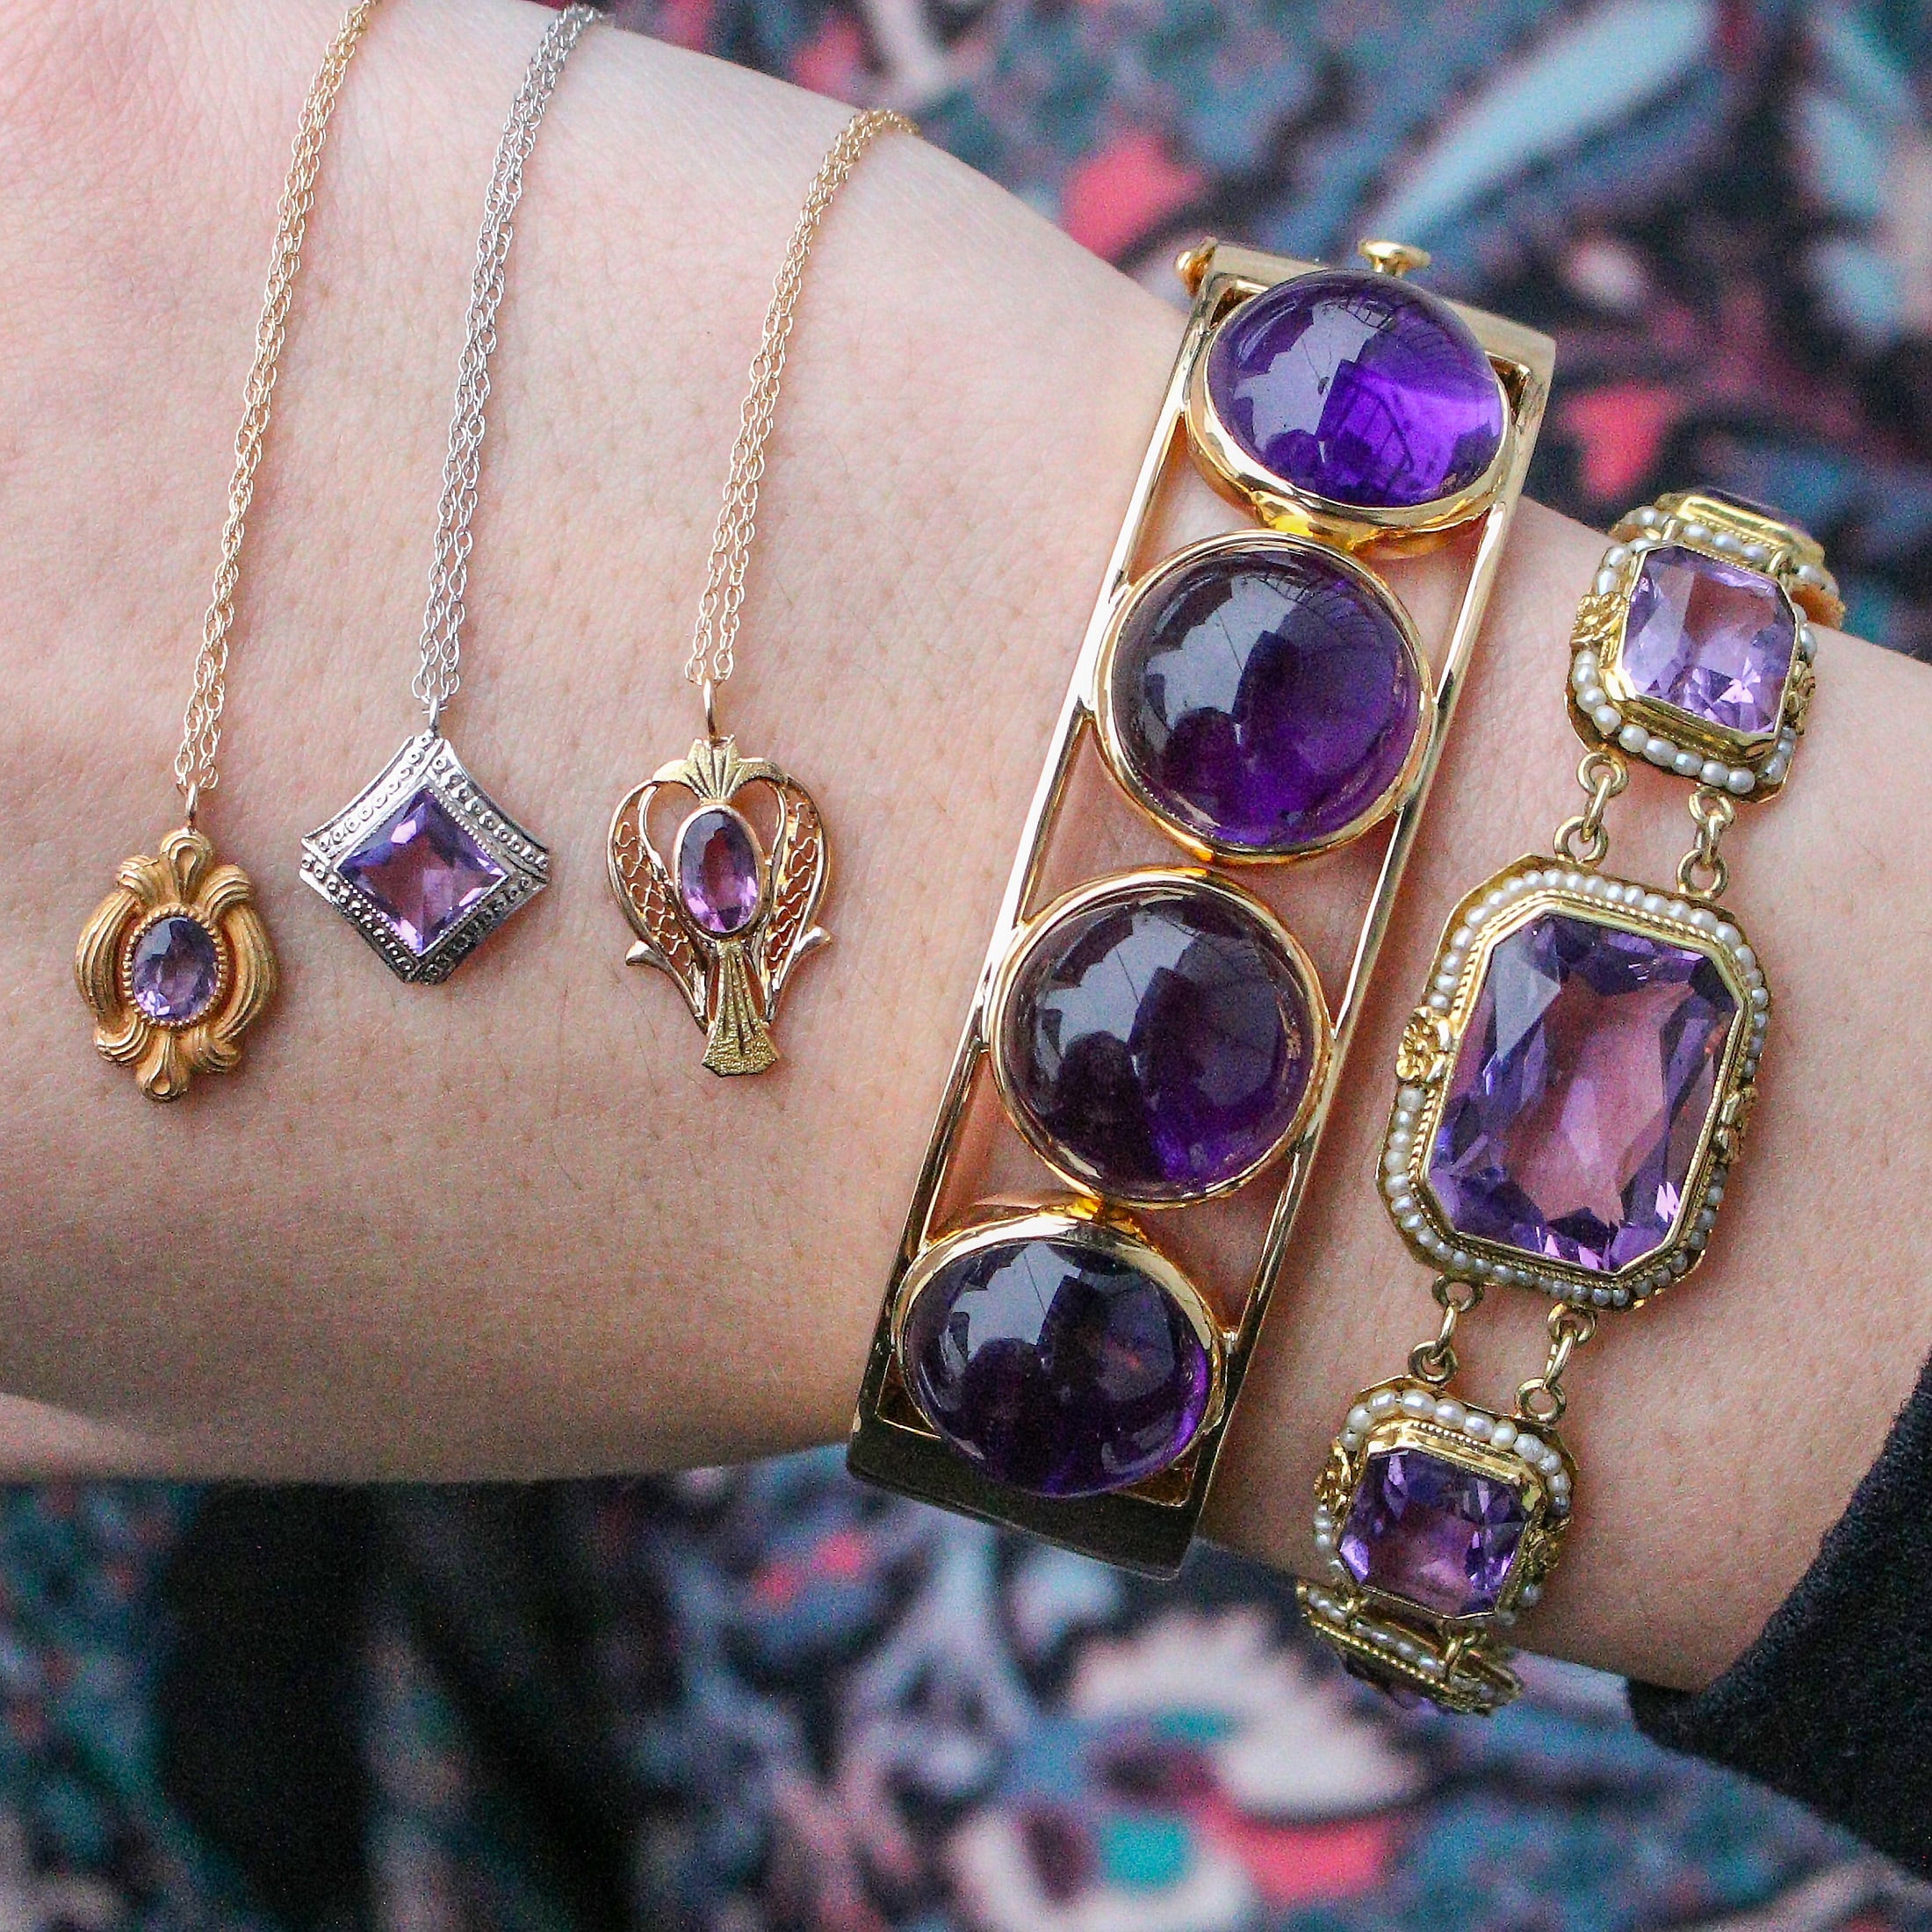 Amethyst bracelets and pendants